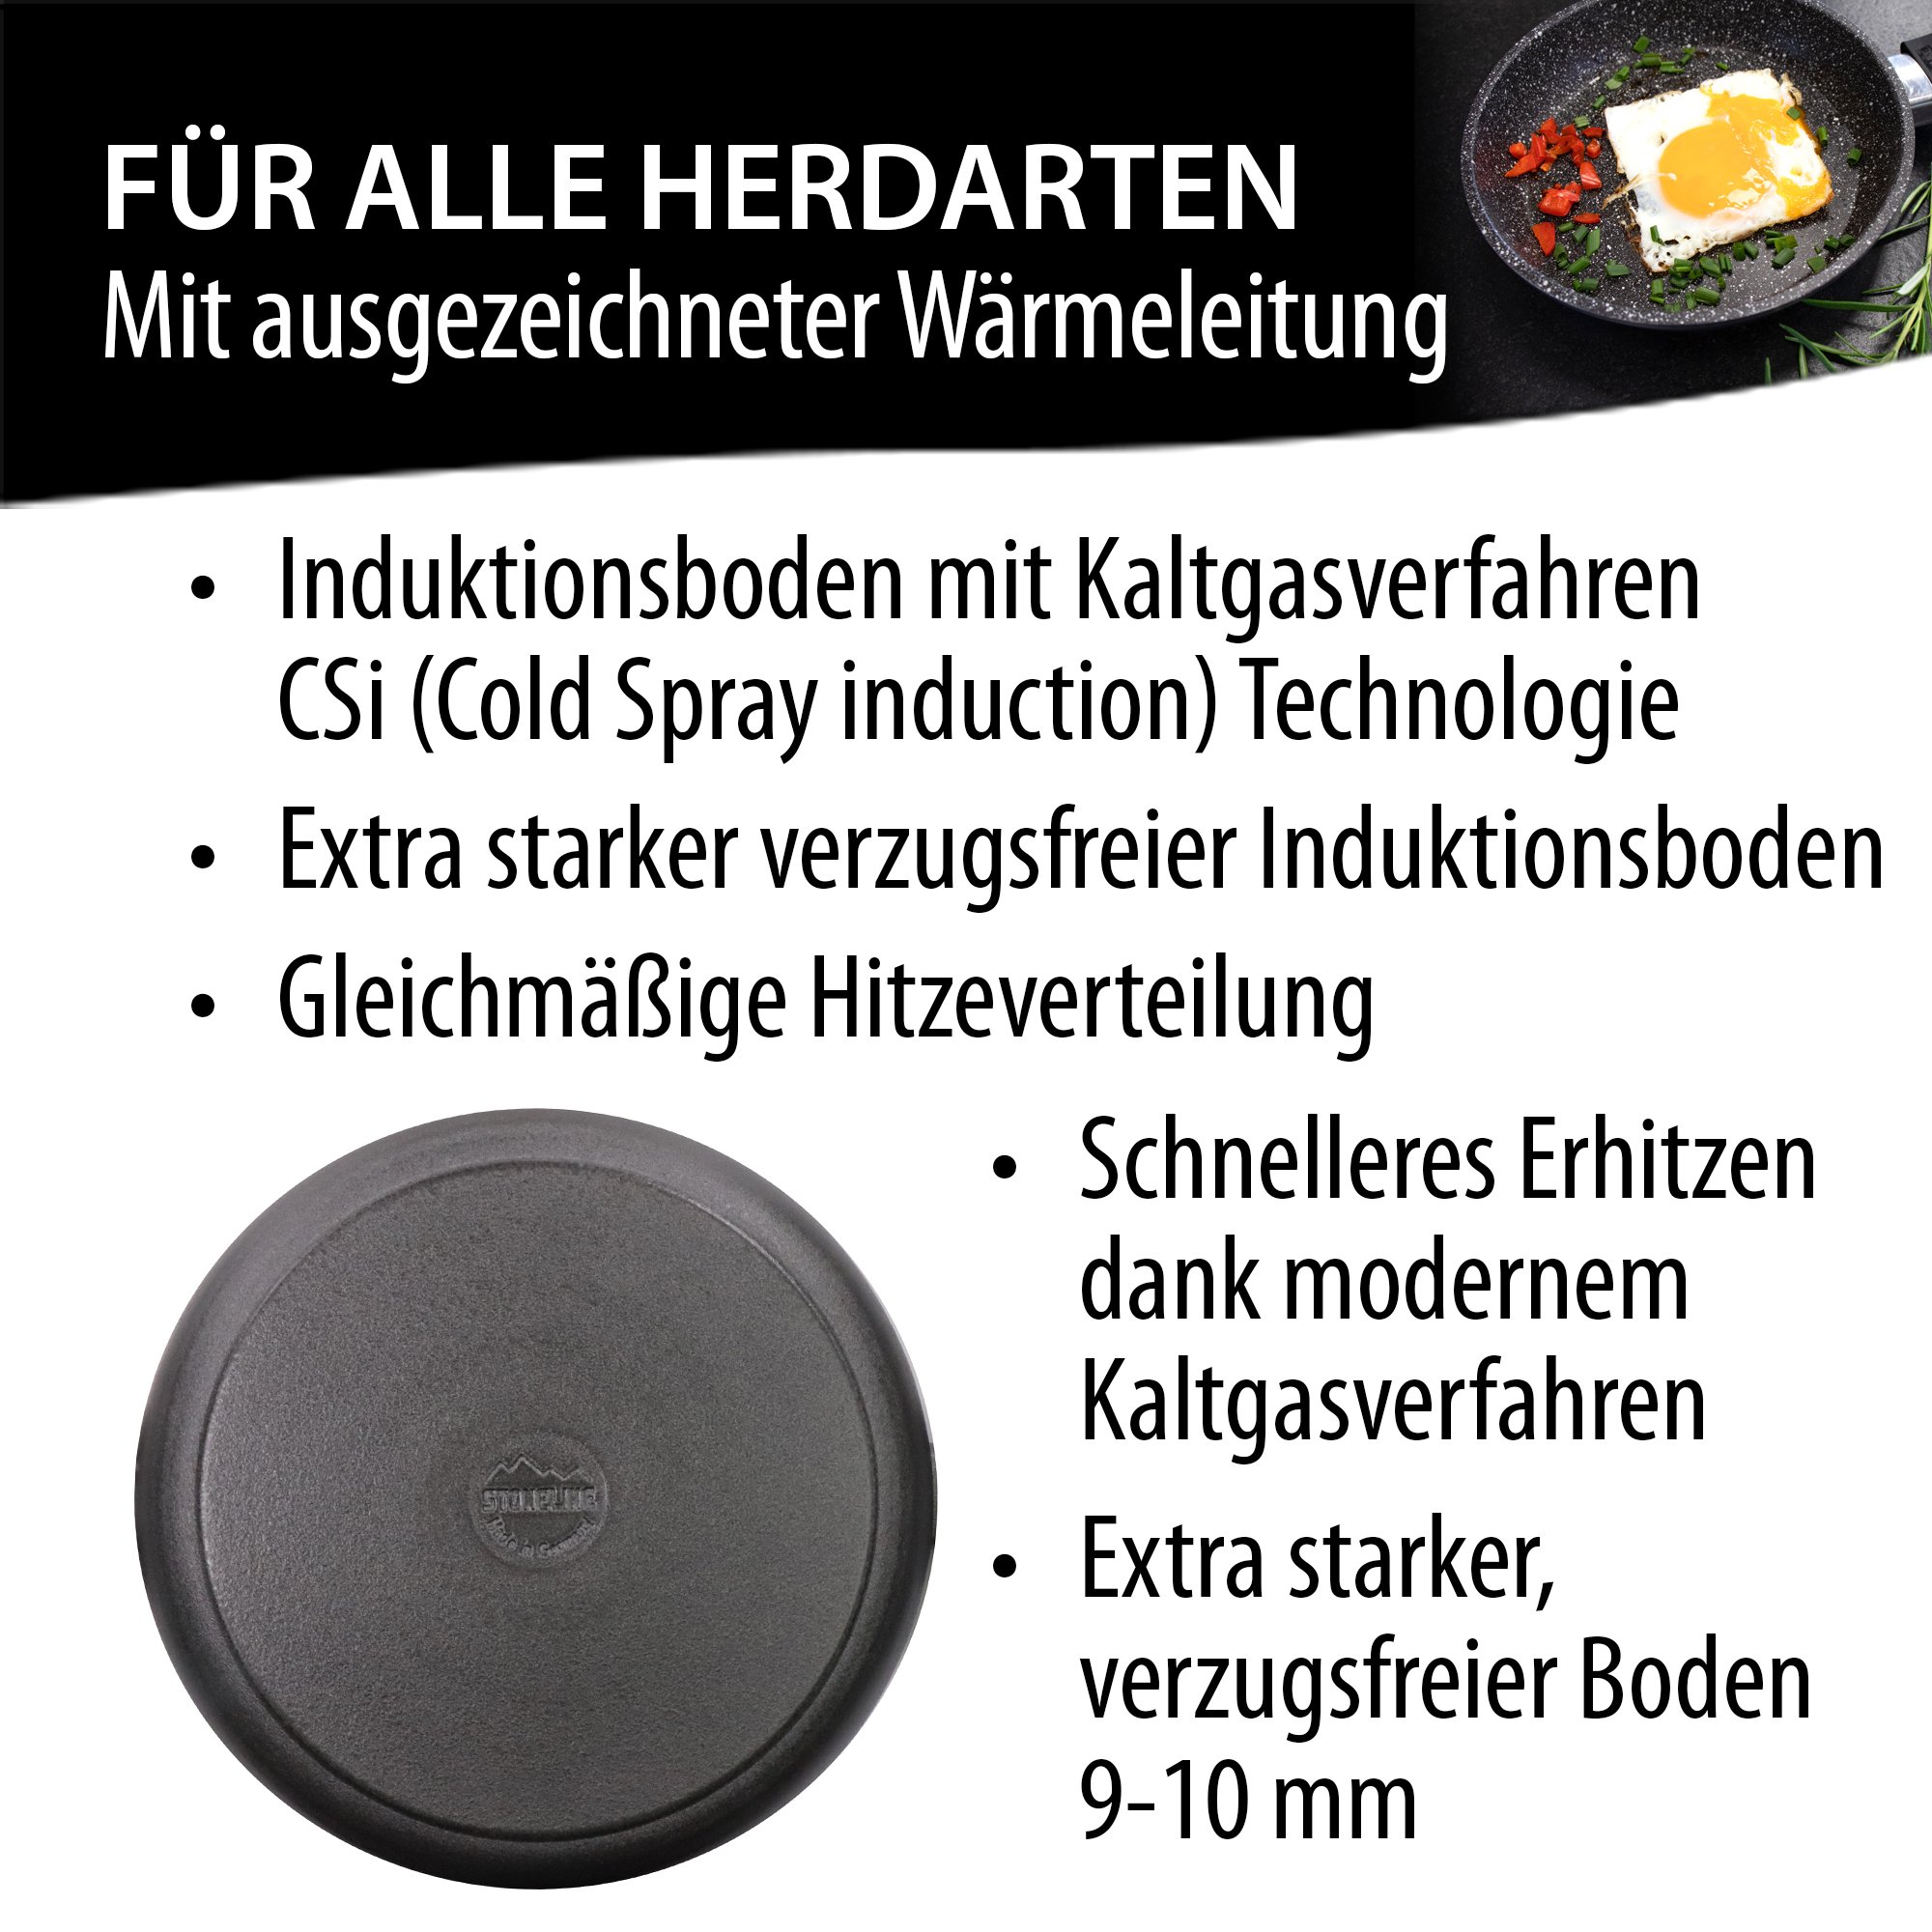 STONELINE® Wok 32 cm, Mango Desmontable, Sartén Honda Antiadherente MADE IN GERMANY